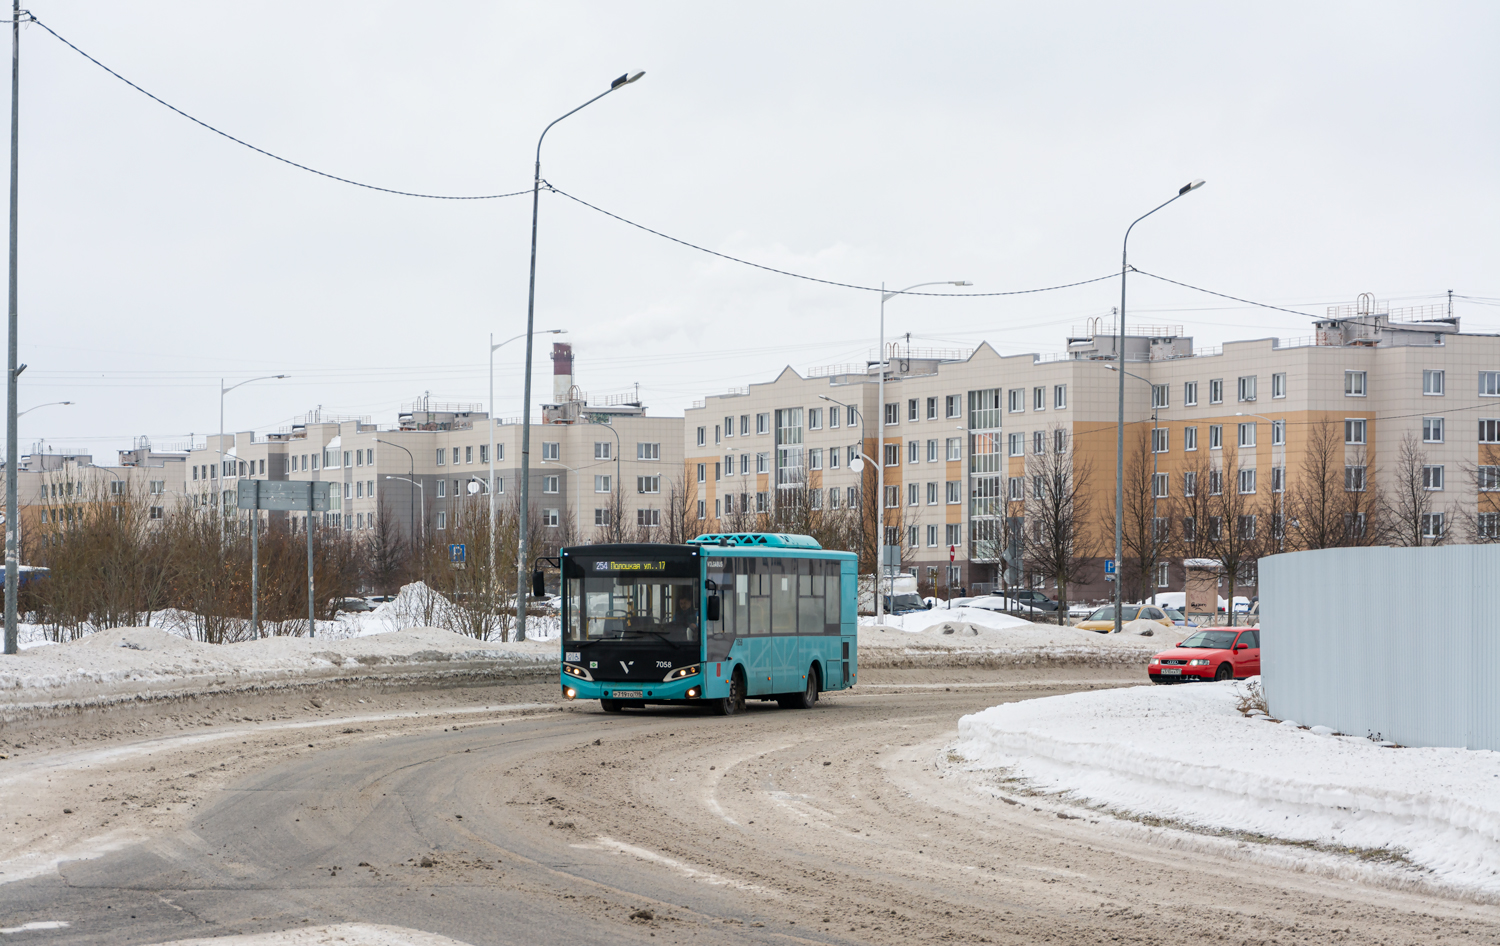 Saint Petersburg, Volgabus-4298.G4 (LNG) # 7058